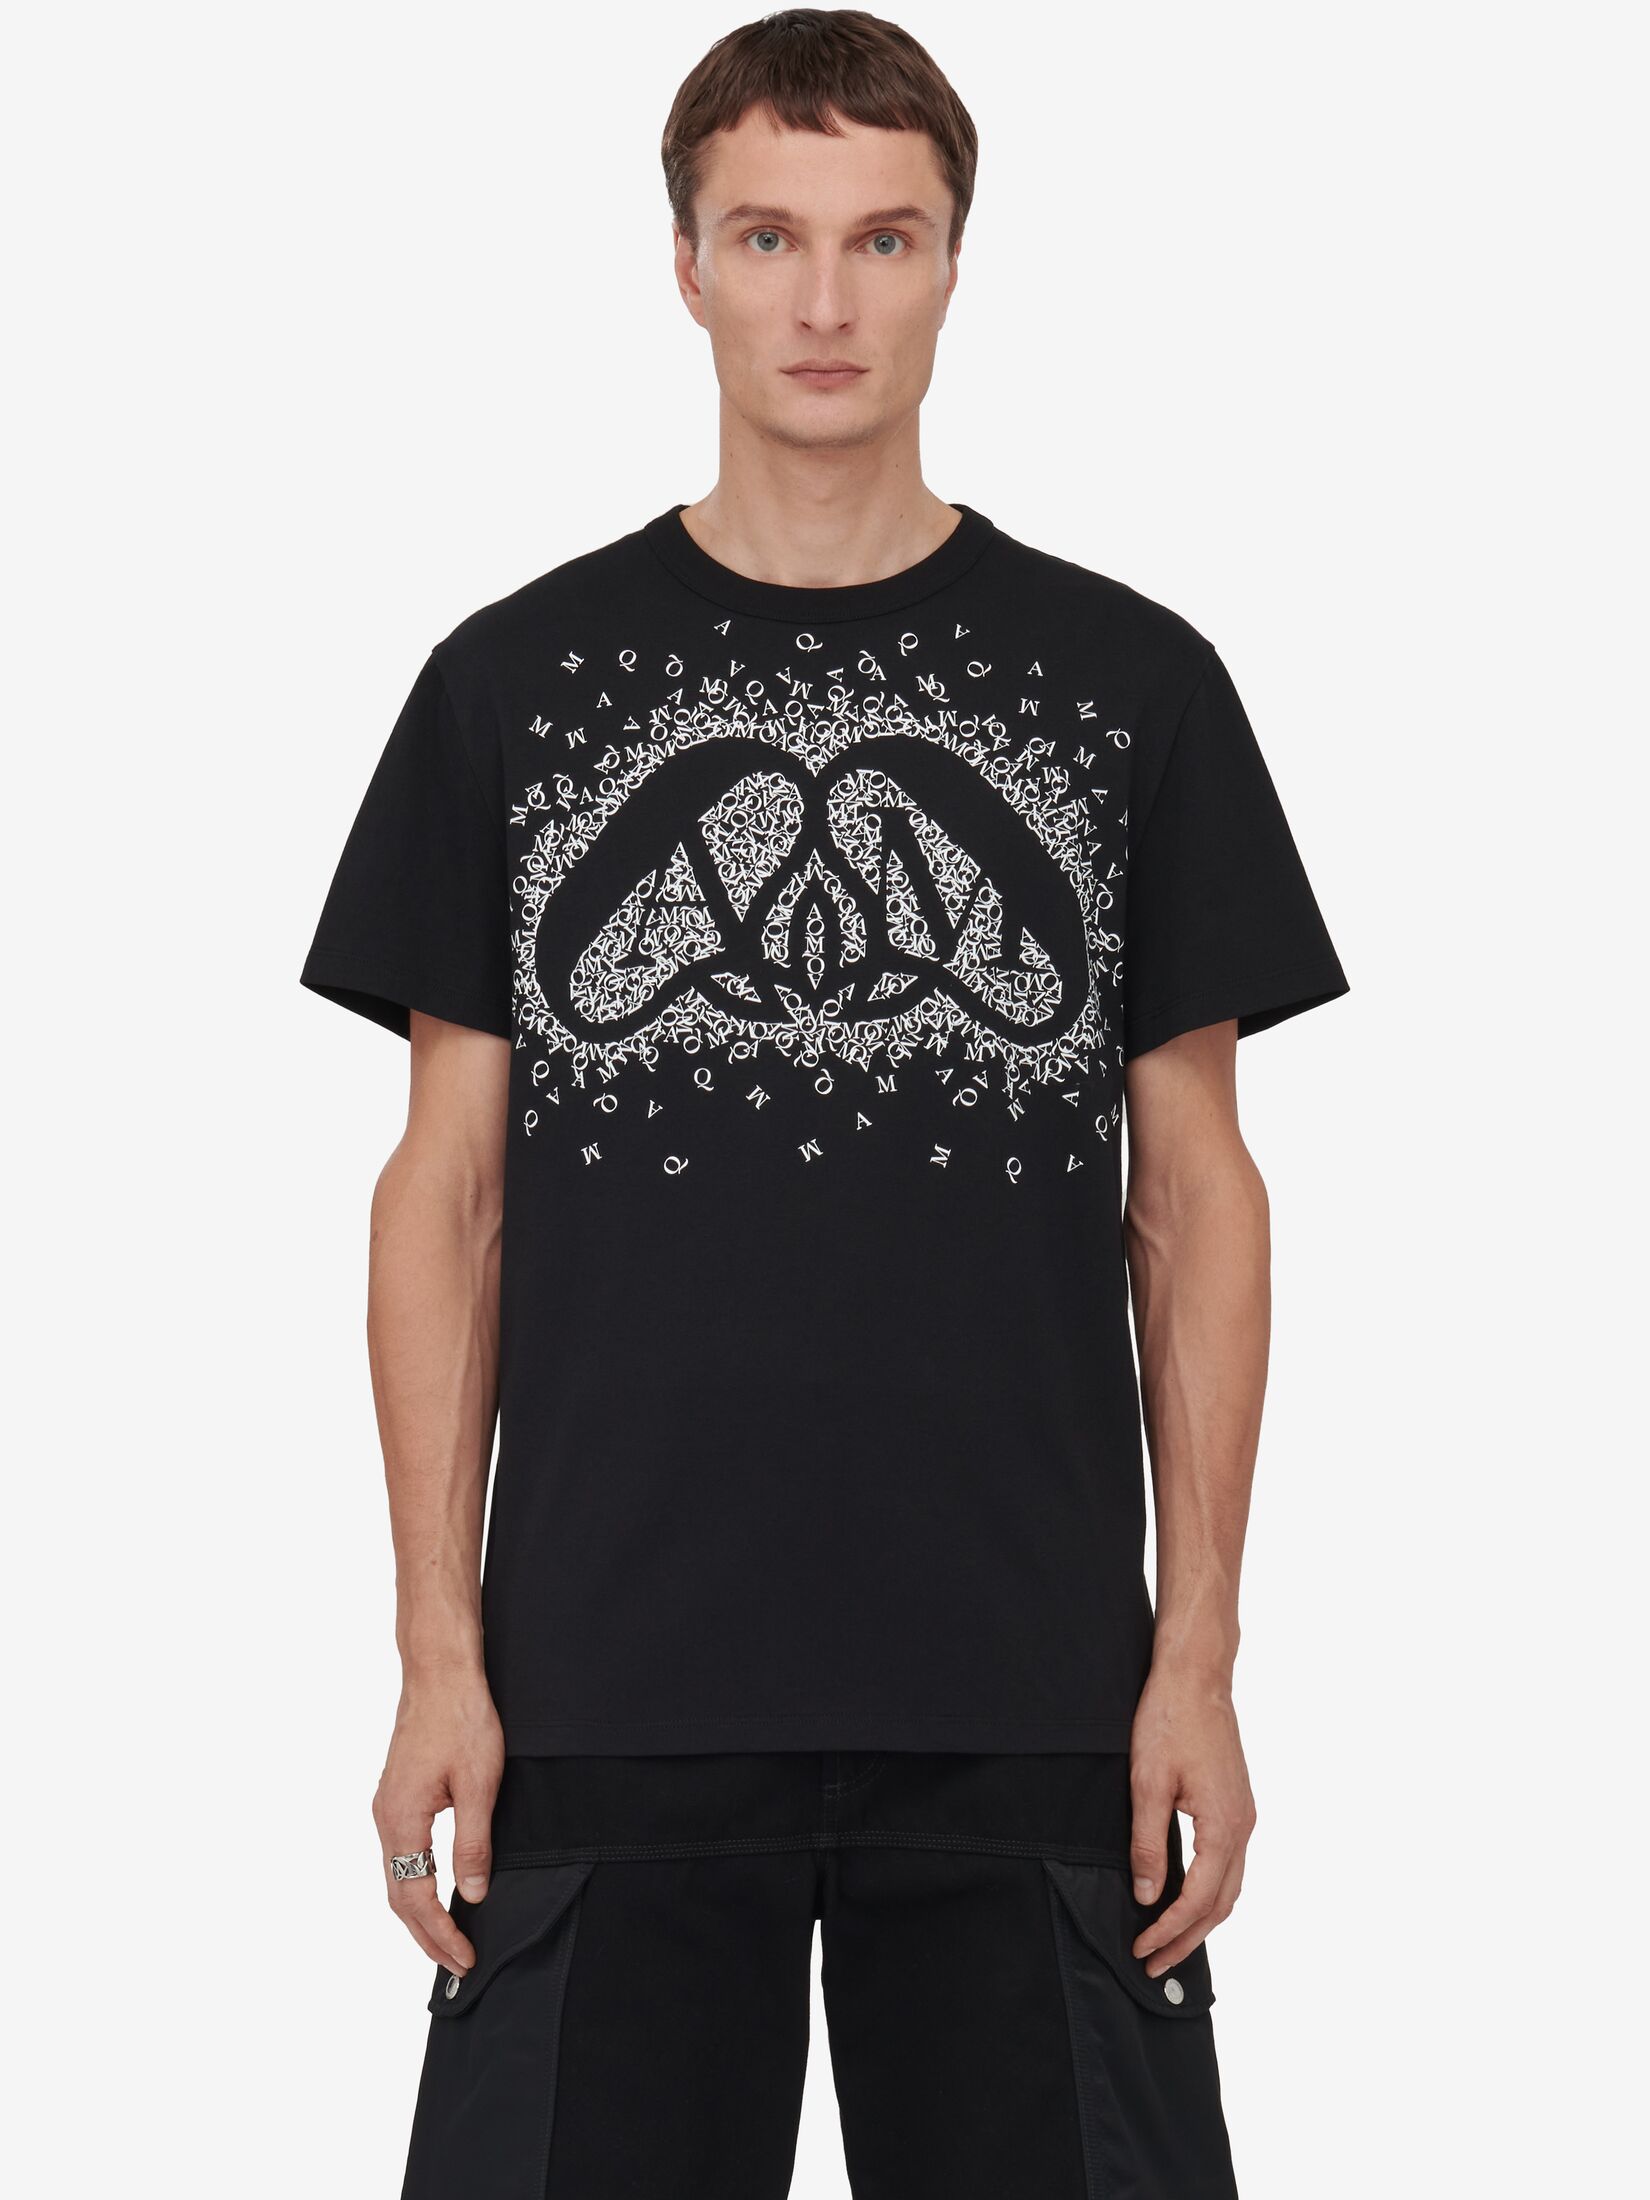 Exploded Charm T-shirt in Black/White | Alexander McQueen US